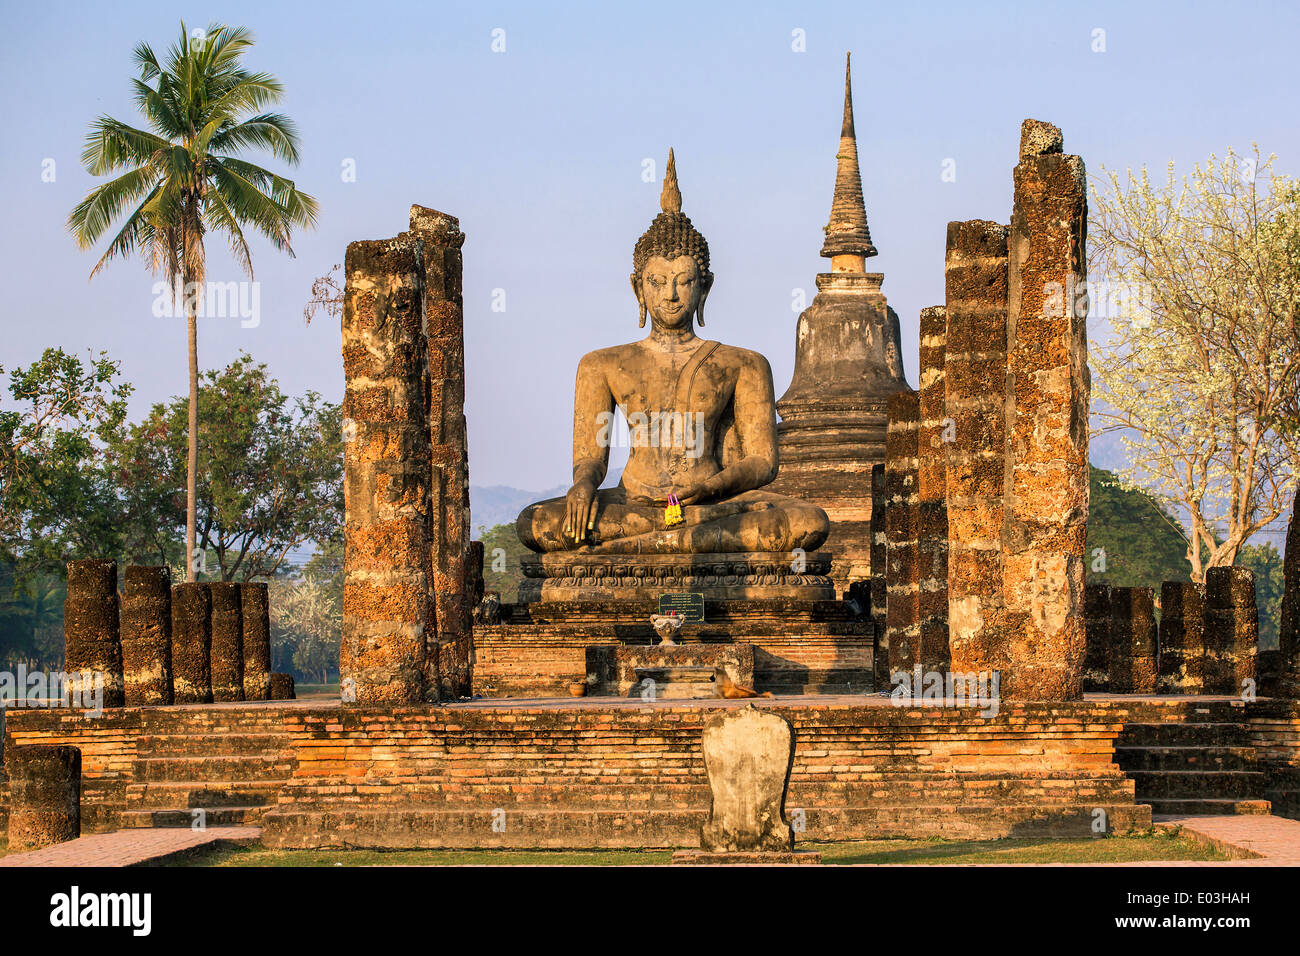 Buddha statue in Wat Mahathat temple, Sukhothai Historical Park, Thailand Stock Photo